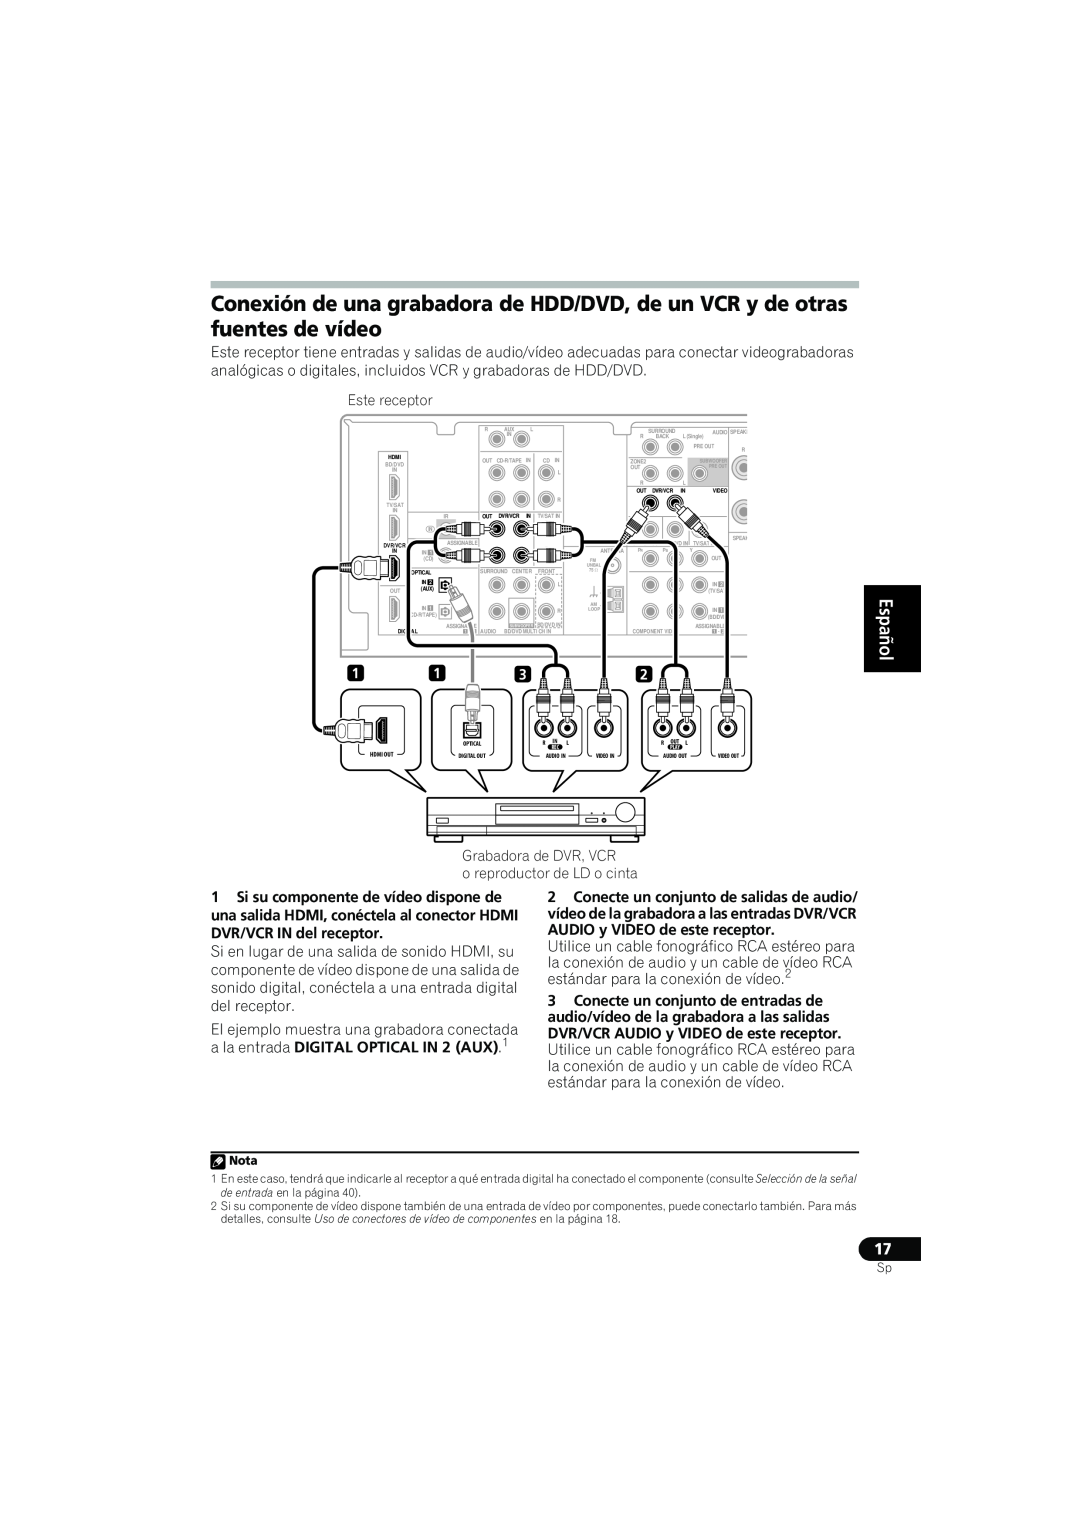 Pioneer VSX-819H-S manual English Español, ala entrada DIGITAL OPTICAL IN 2 AUX.1 